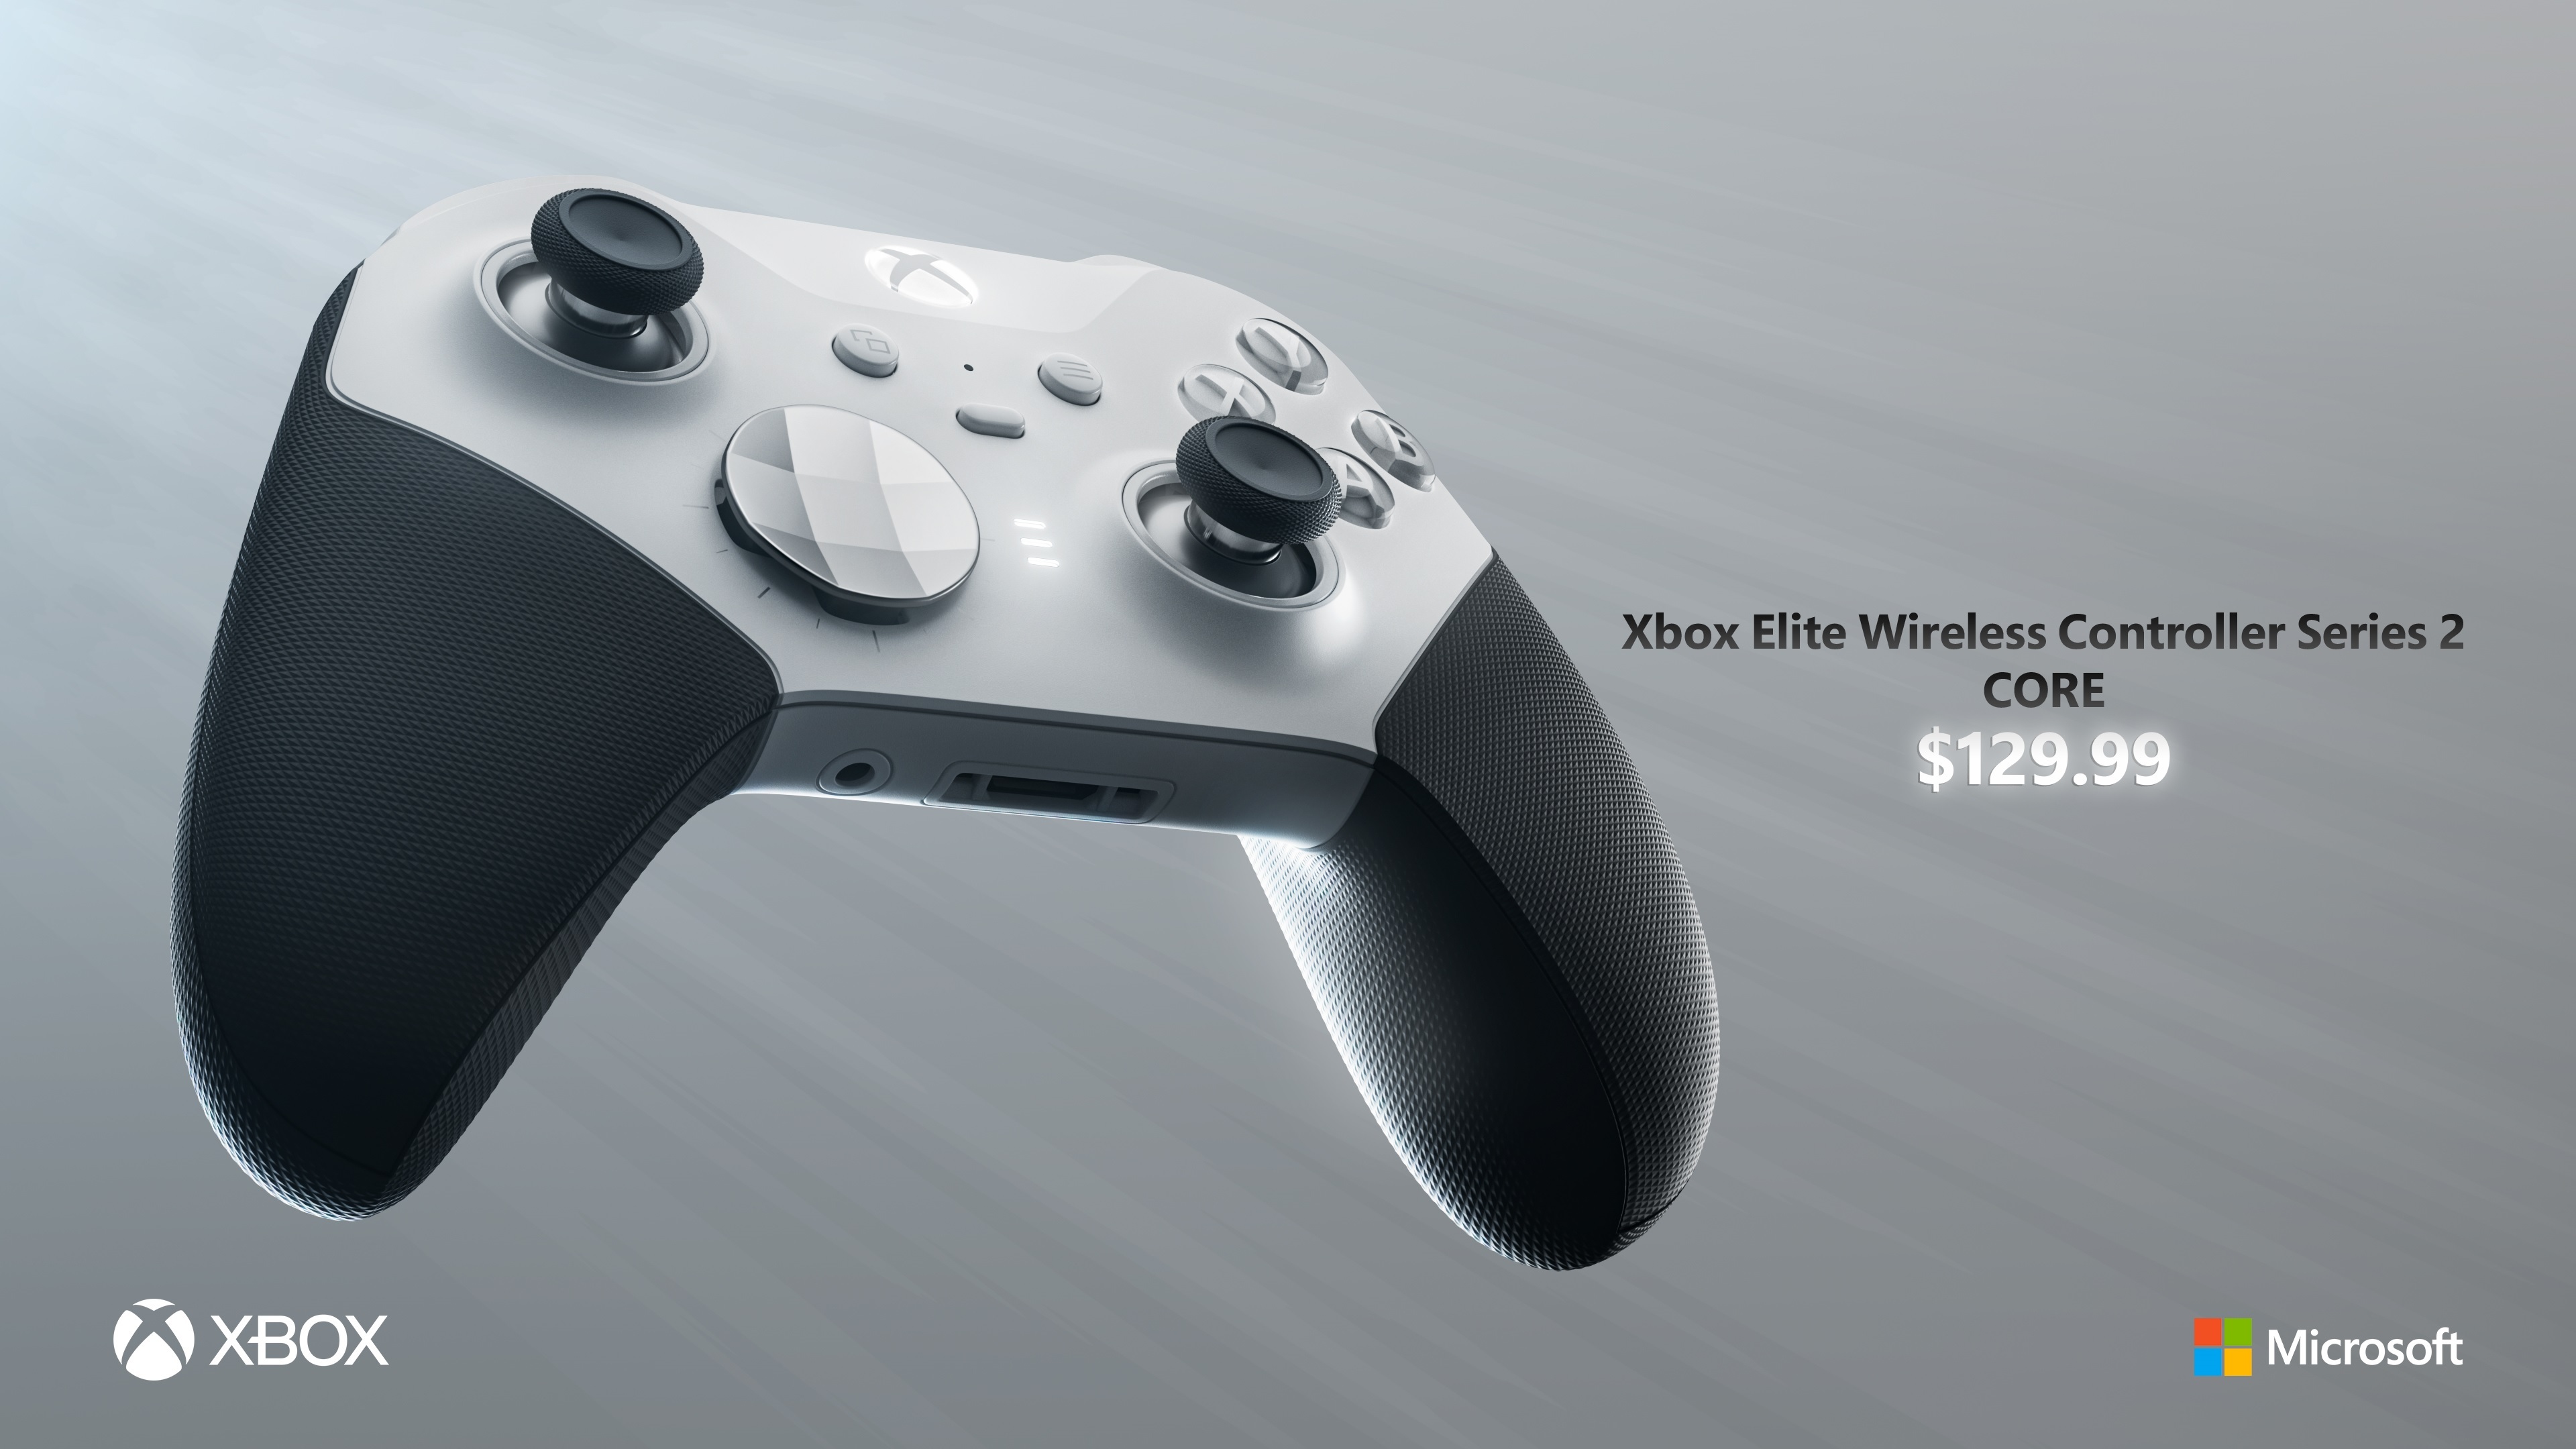 The new Xbox Elite controller in white